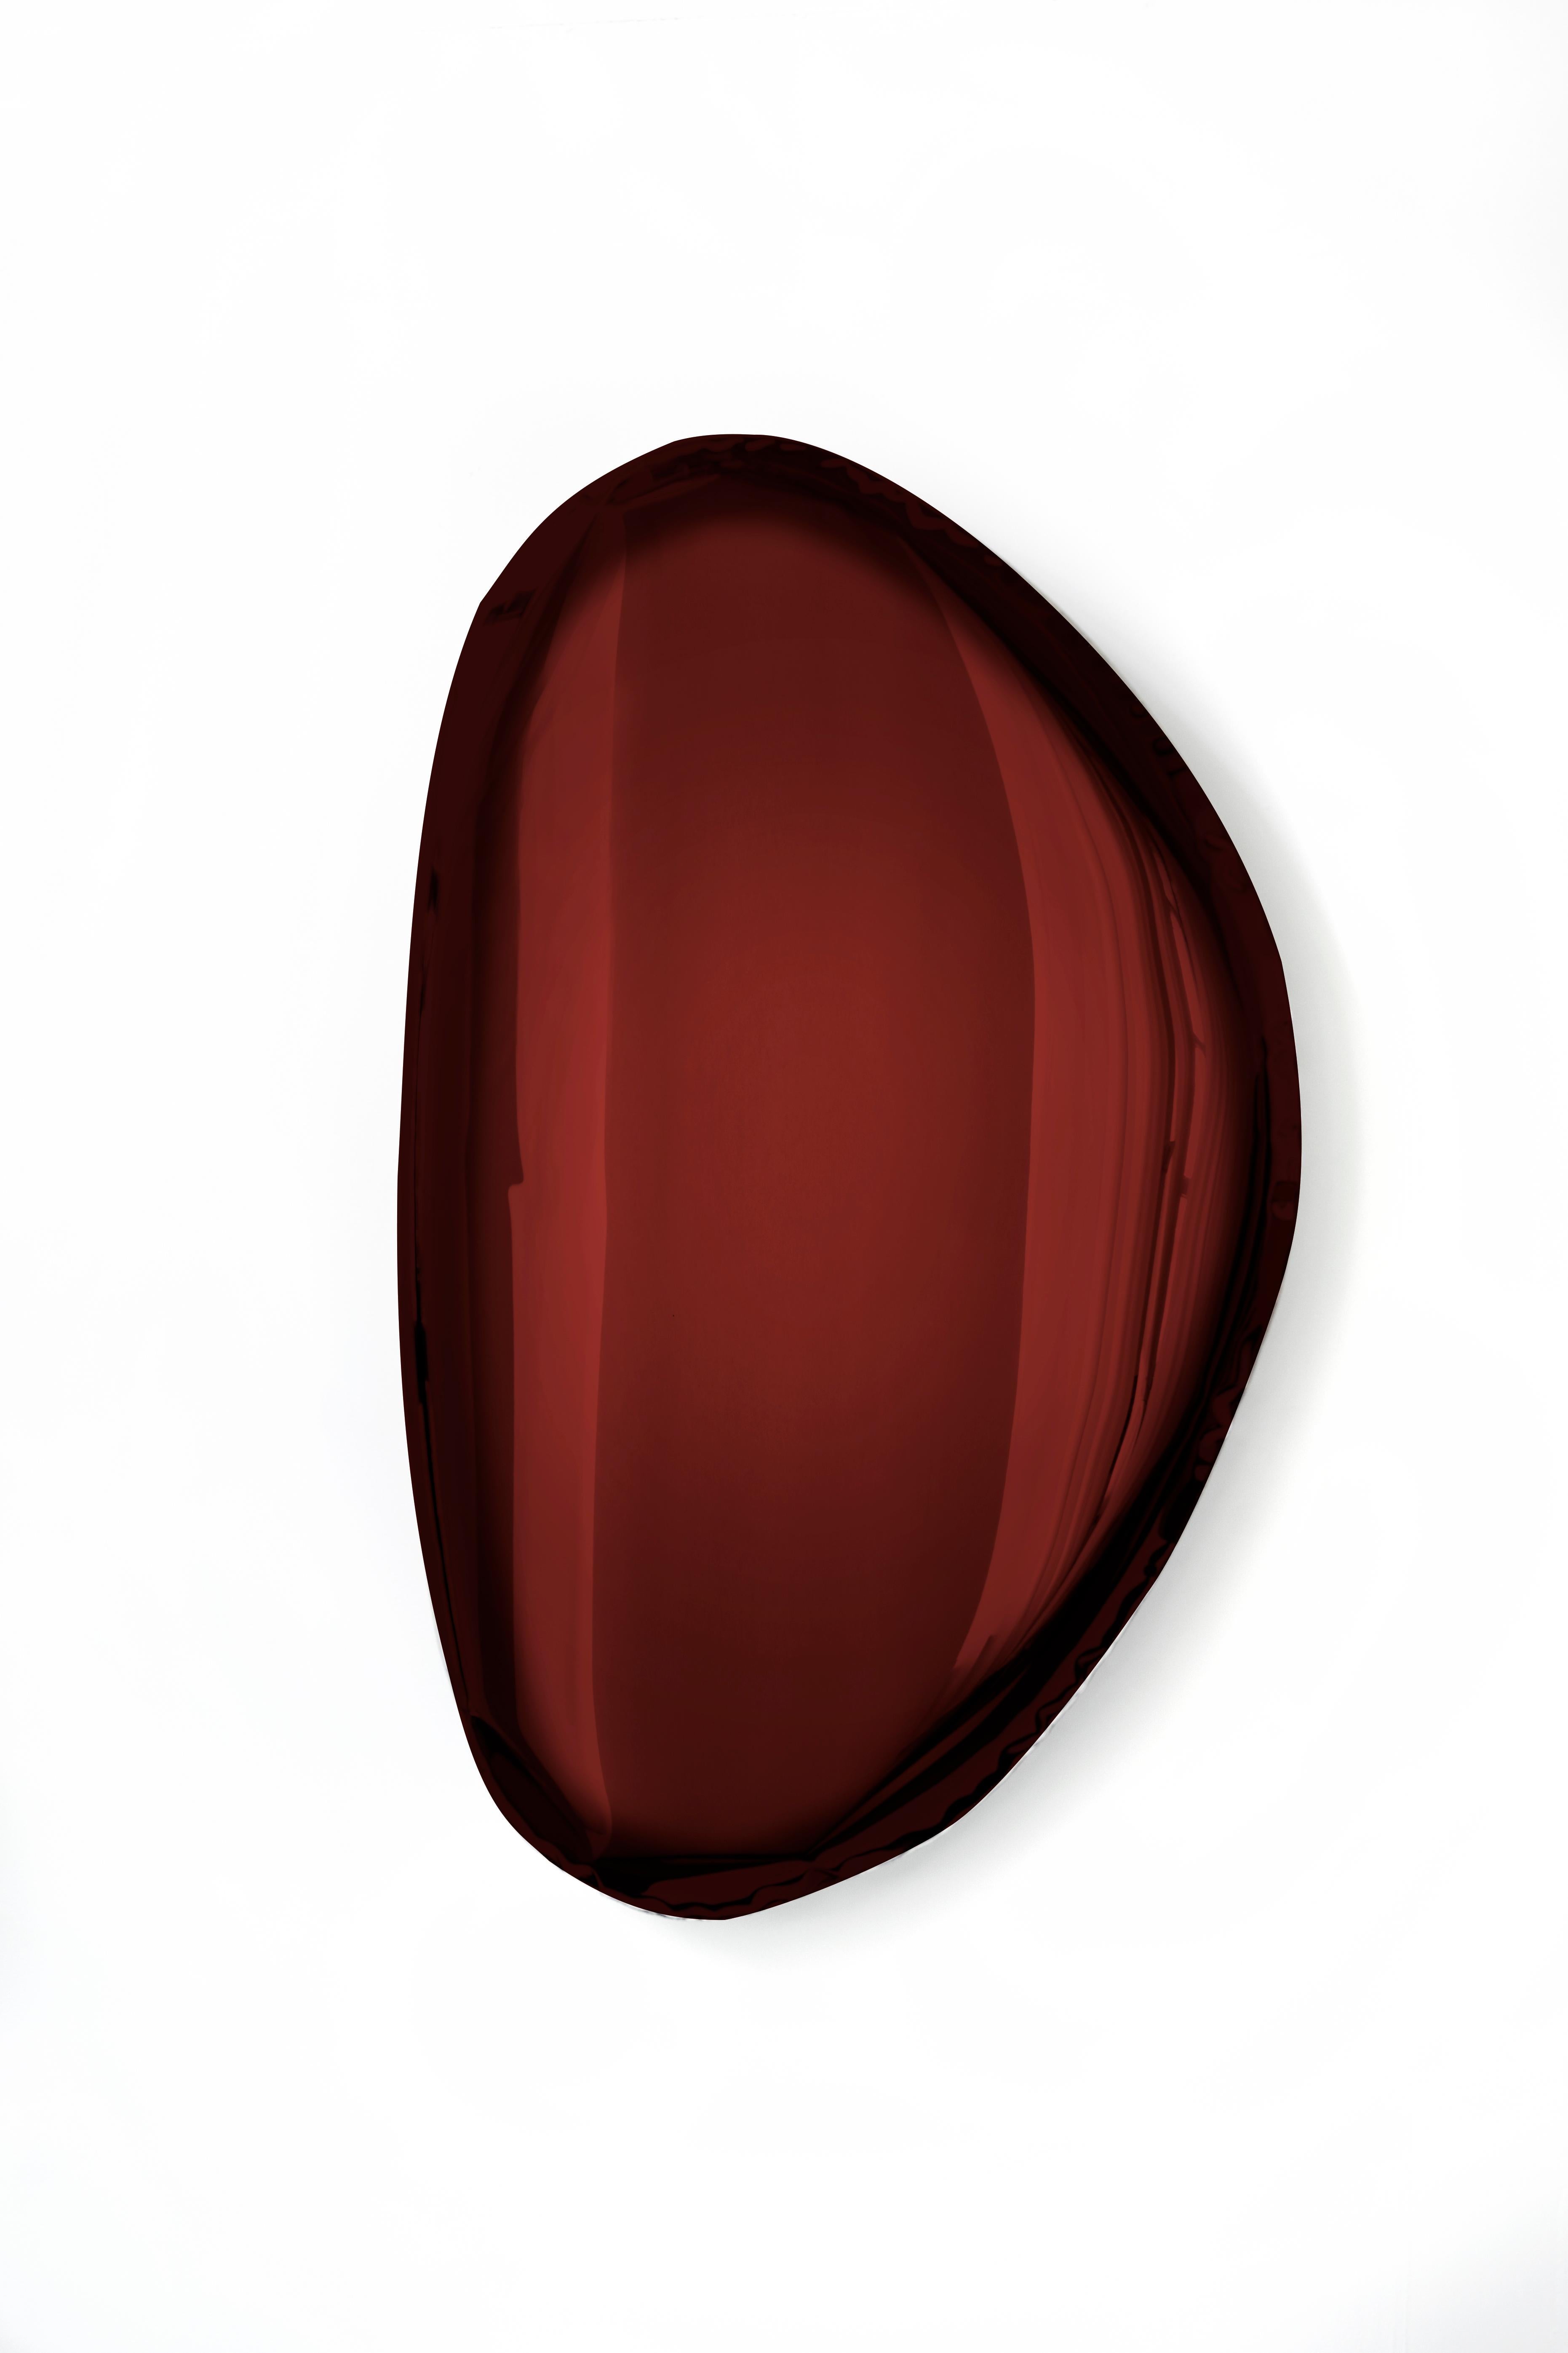 Minimalist Mirror Tafla O4 Rubin Red, in Polished Stainless Steel by Zieta For Sale